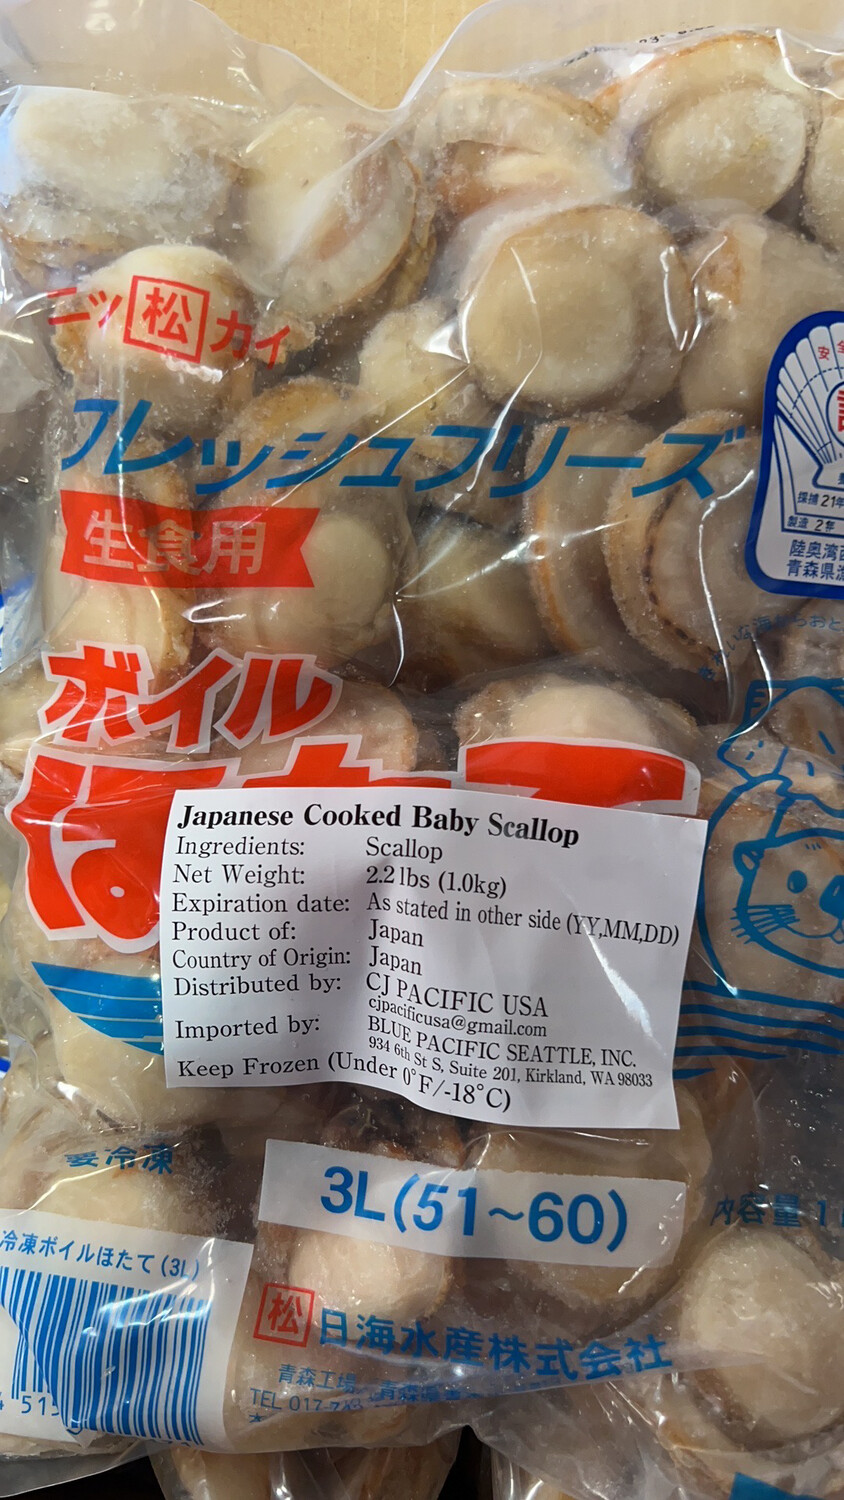 3L Japan Cooked Baby Scallop 2.2lbs 青森日本熟带子 特大3L/ 1级